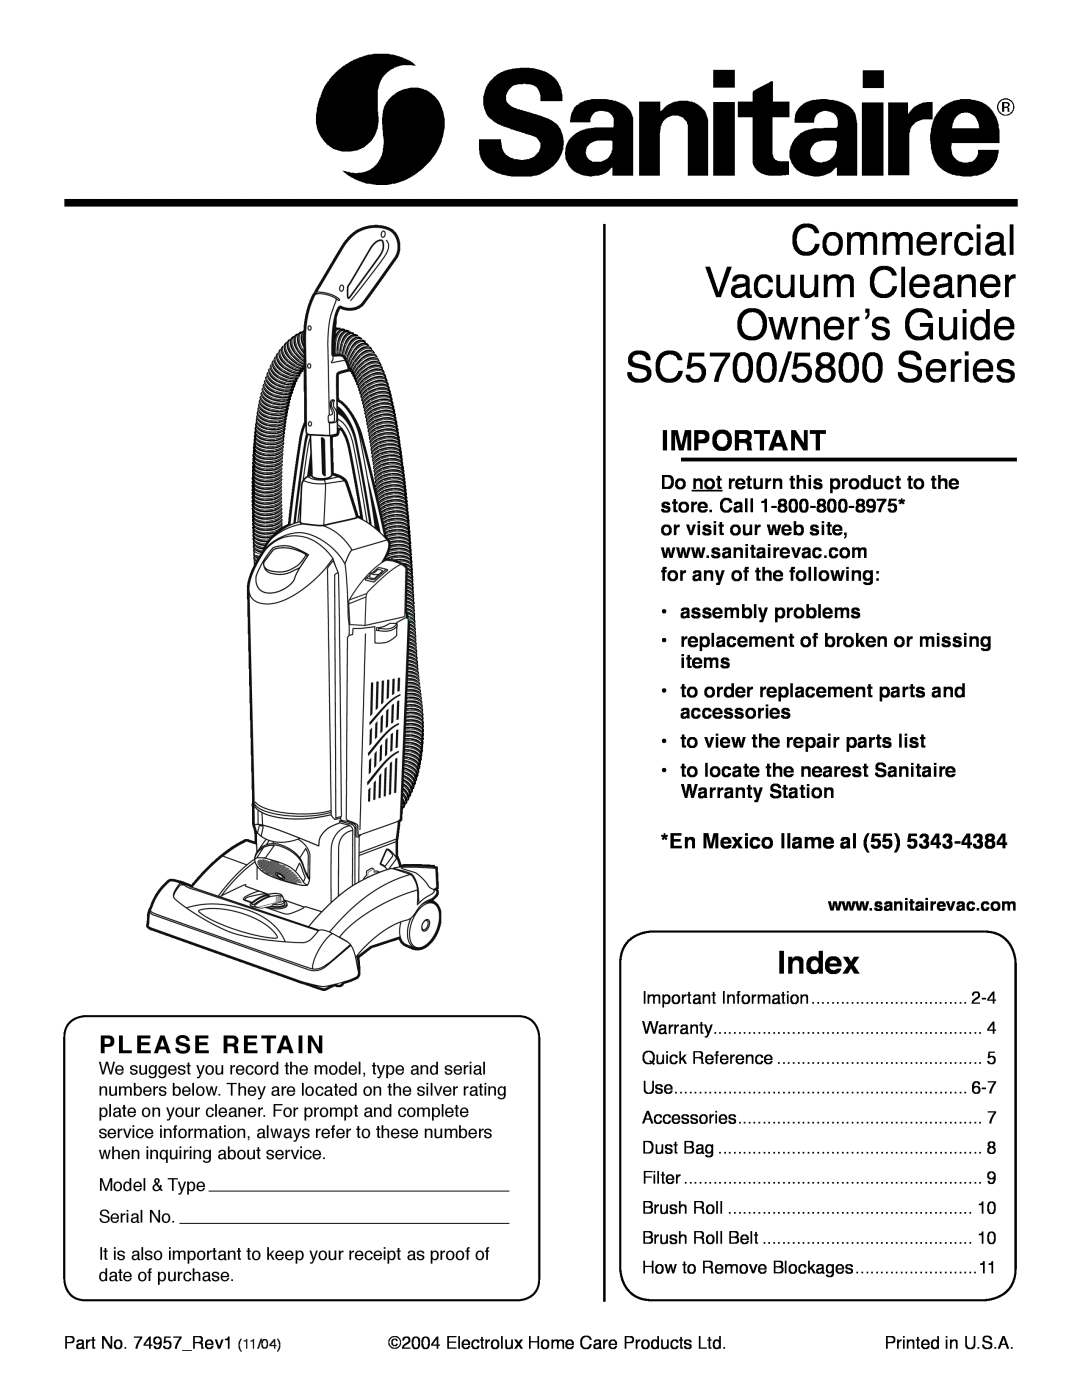 Sanitaire SC5700 Series warranty Please Retain, En Mexico llame al, Commercial Vacuum Cleaner Ownerʼs Guide, Index 